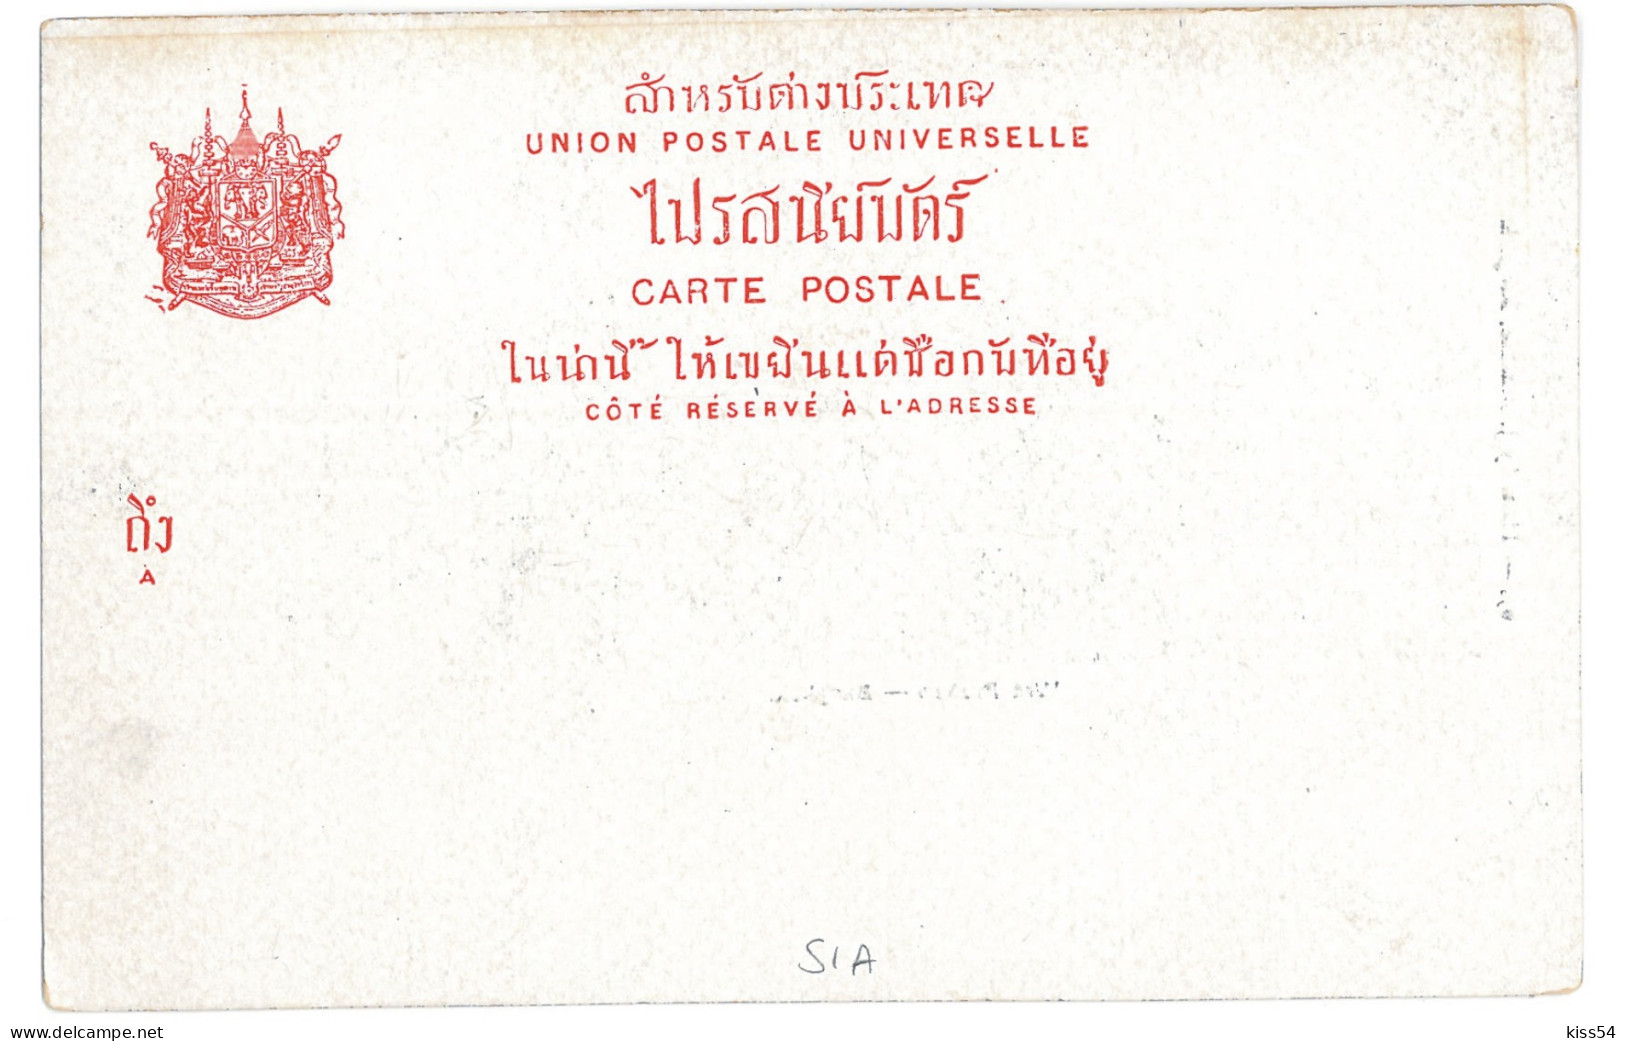 TH 60 - 11927 BANGKOK, Thailand, Litho - Old Postcard - Unused - Thailand